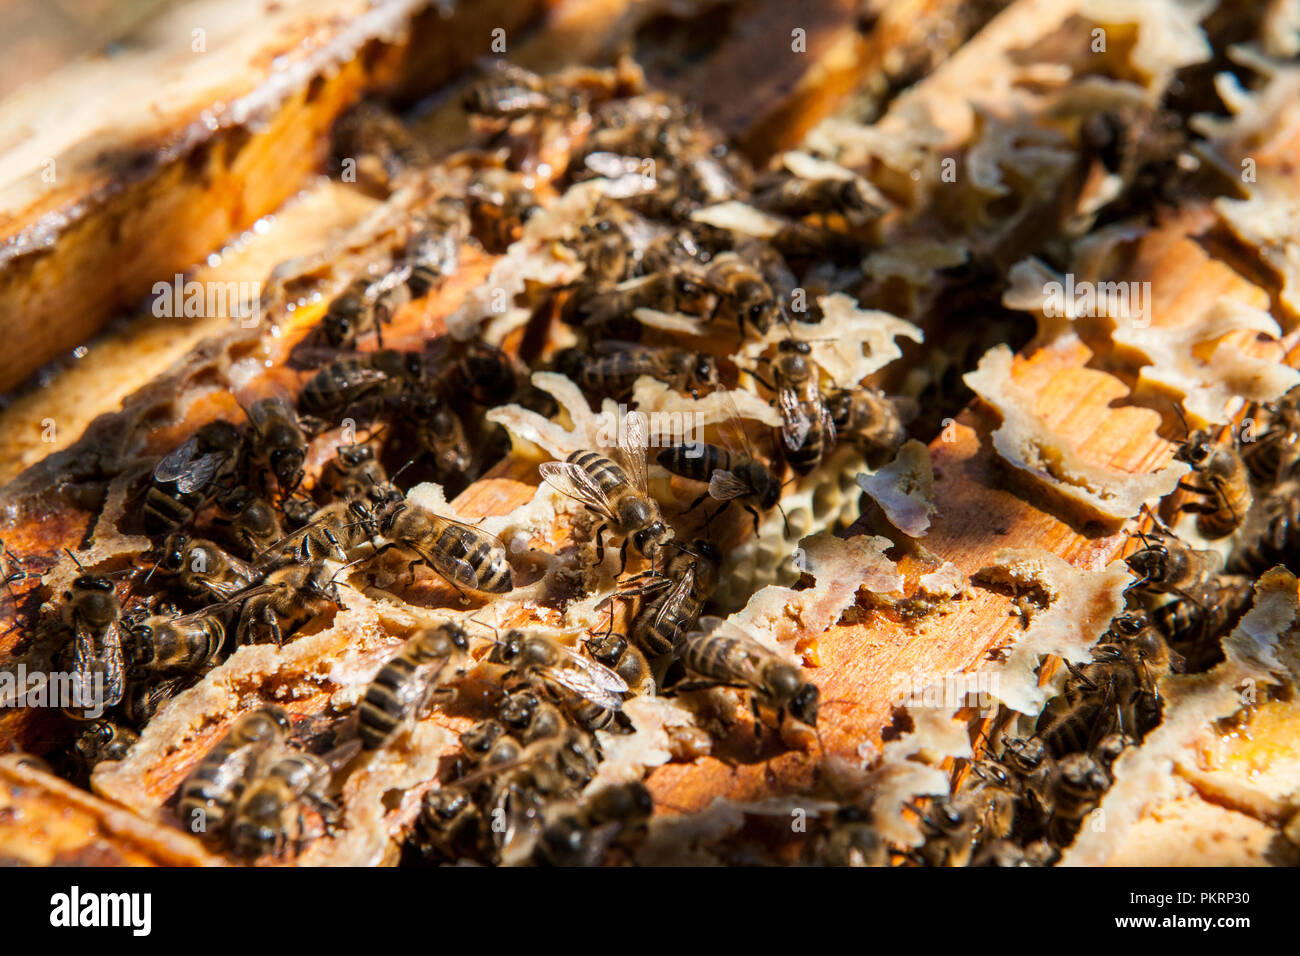 Working bees on honeycomb. Beekeeping concept. Healthy food. Stock Photo